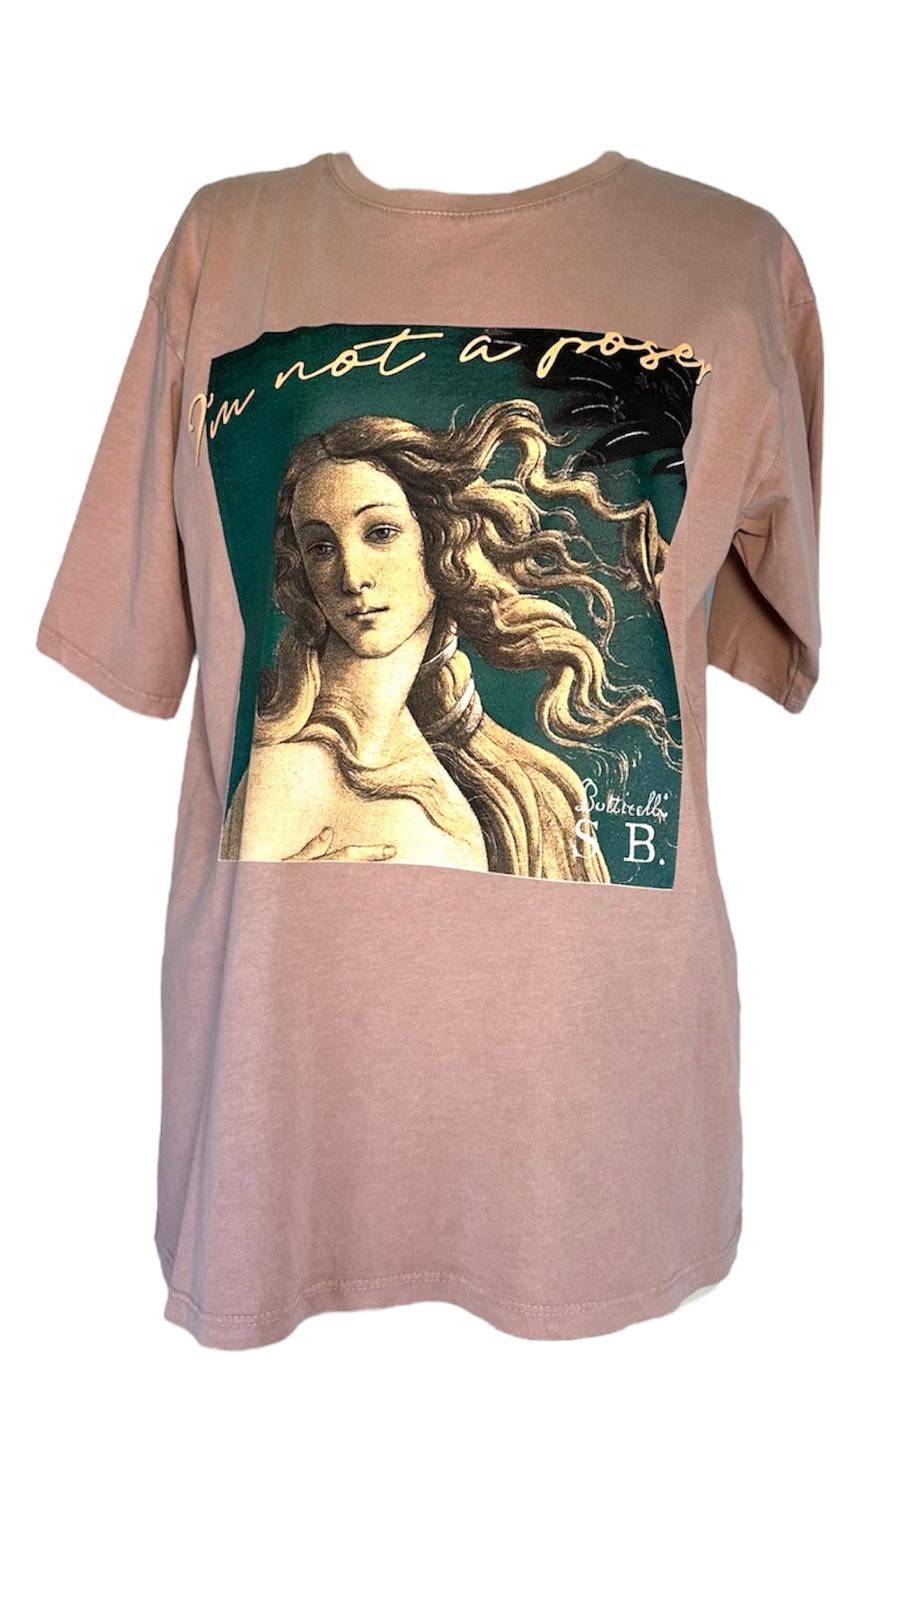 T-shirt Botticelli